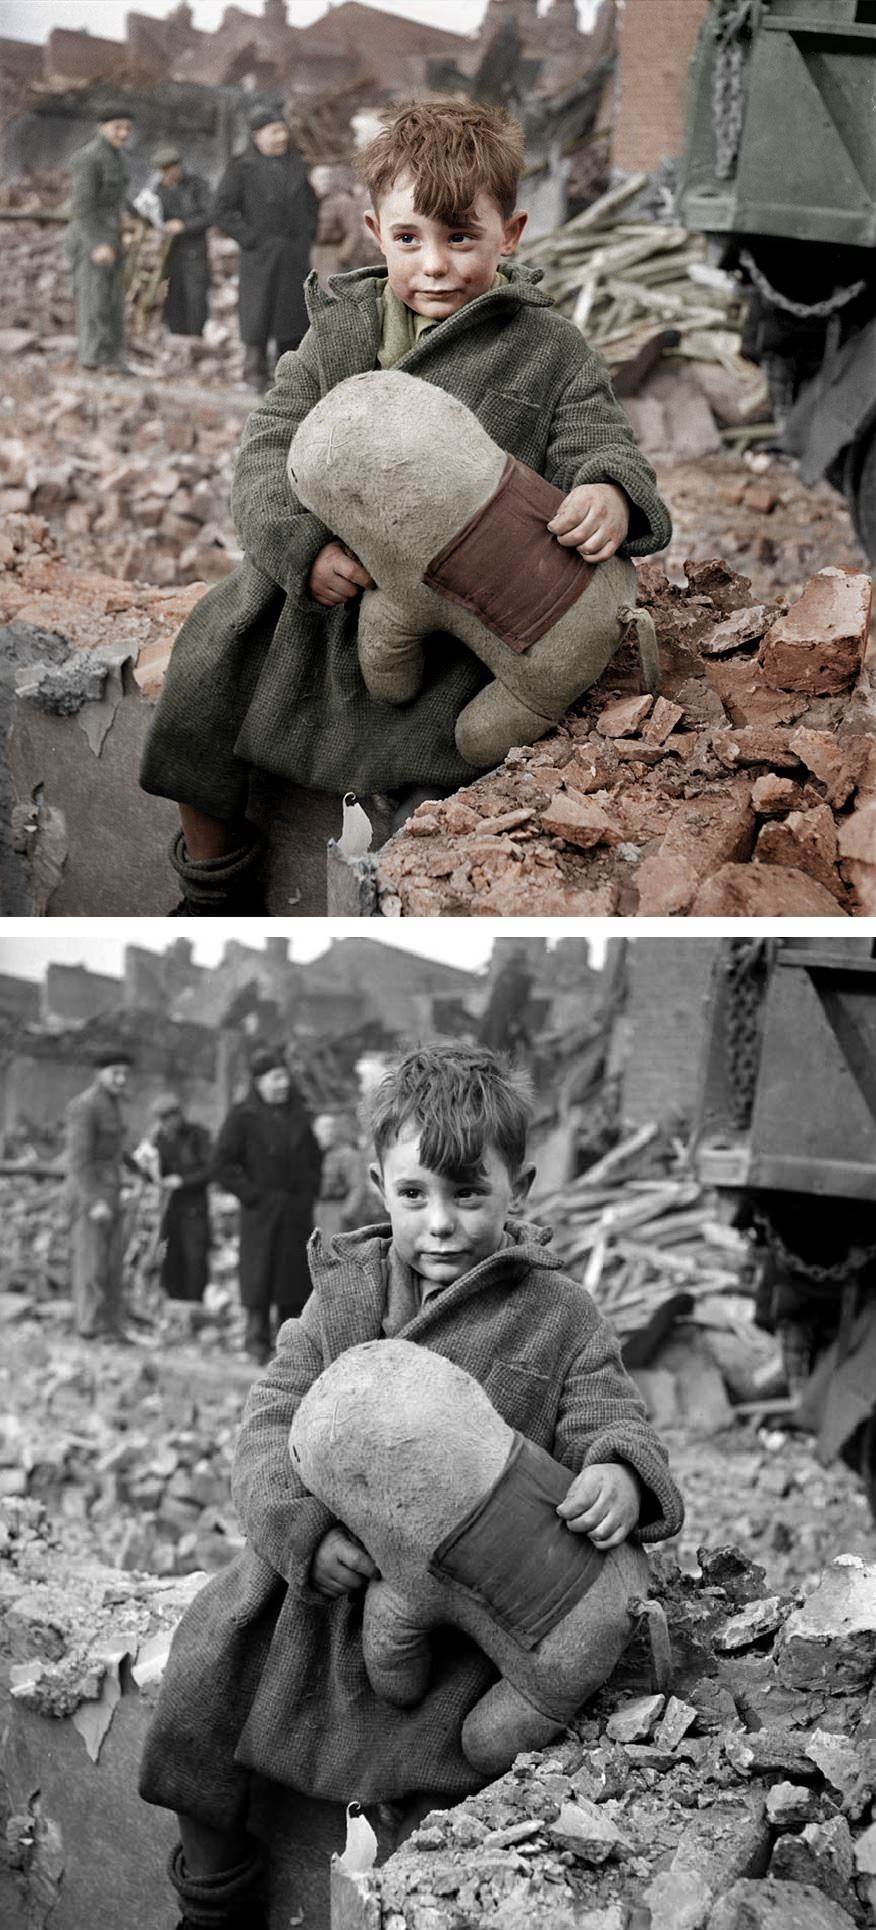 Abandoned Boy Holding a Stuffed Toy Animal. London 1945